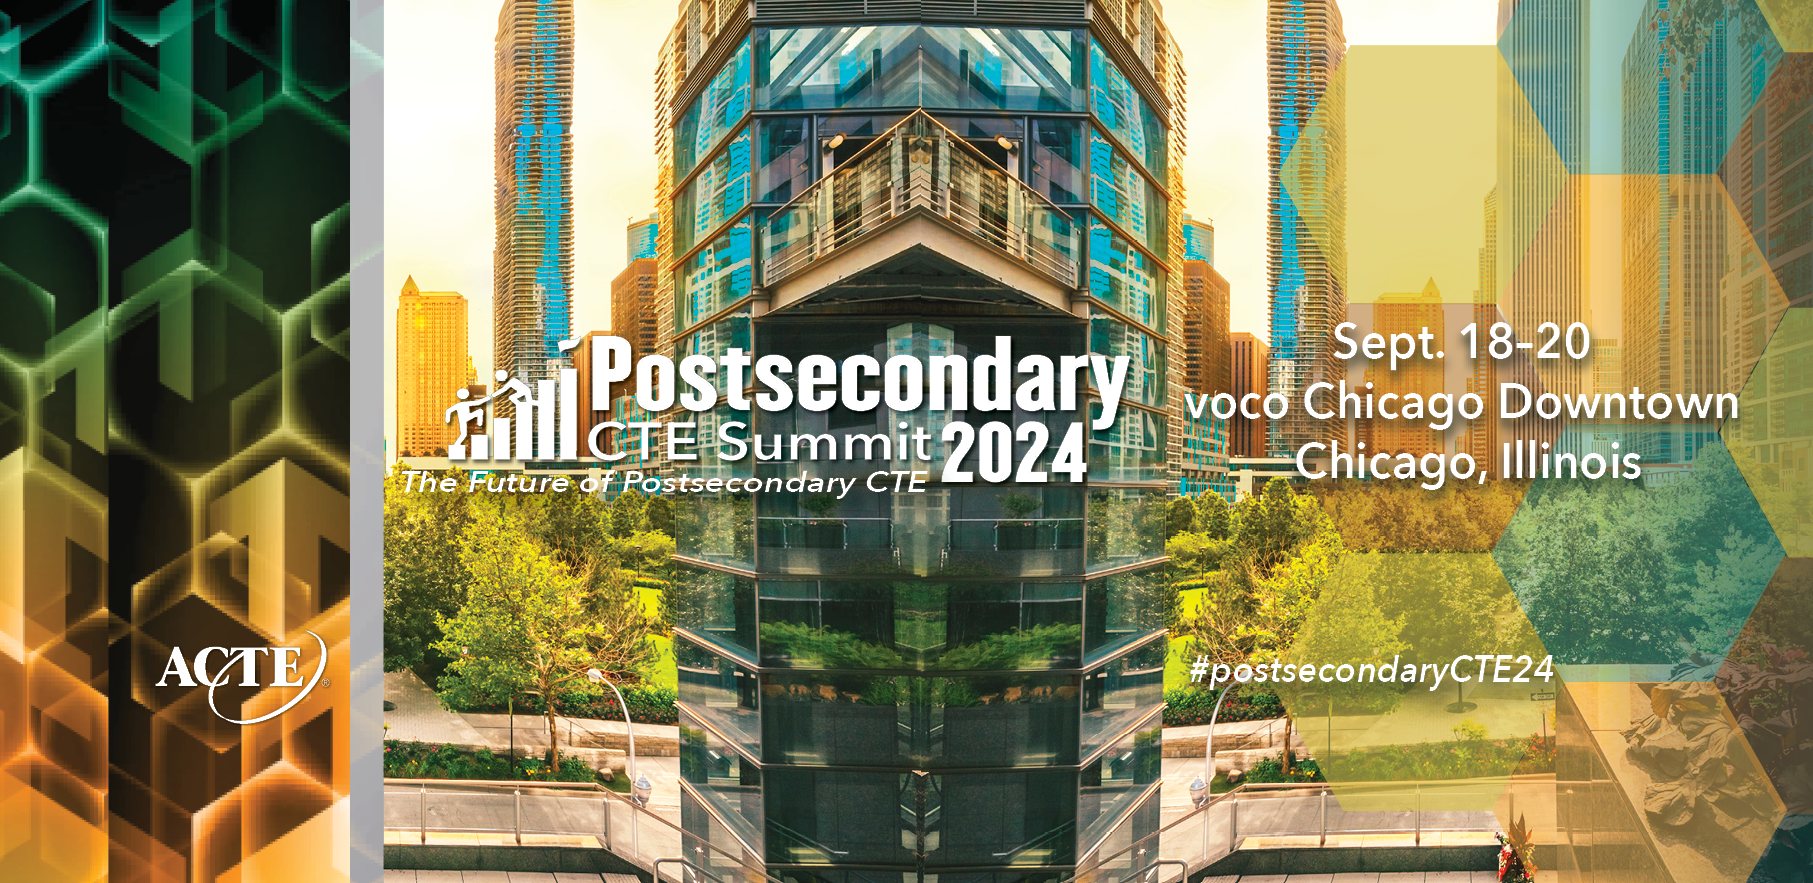 Postsecondary CTE Summit